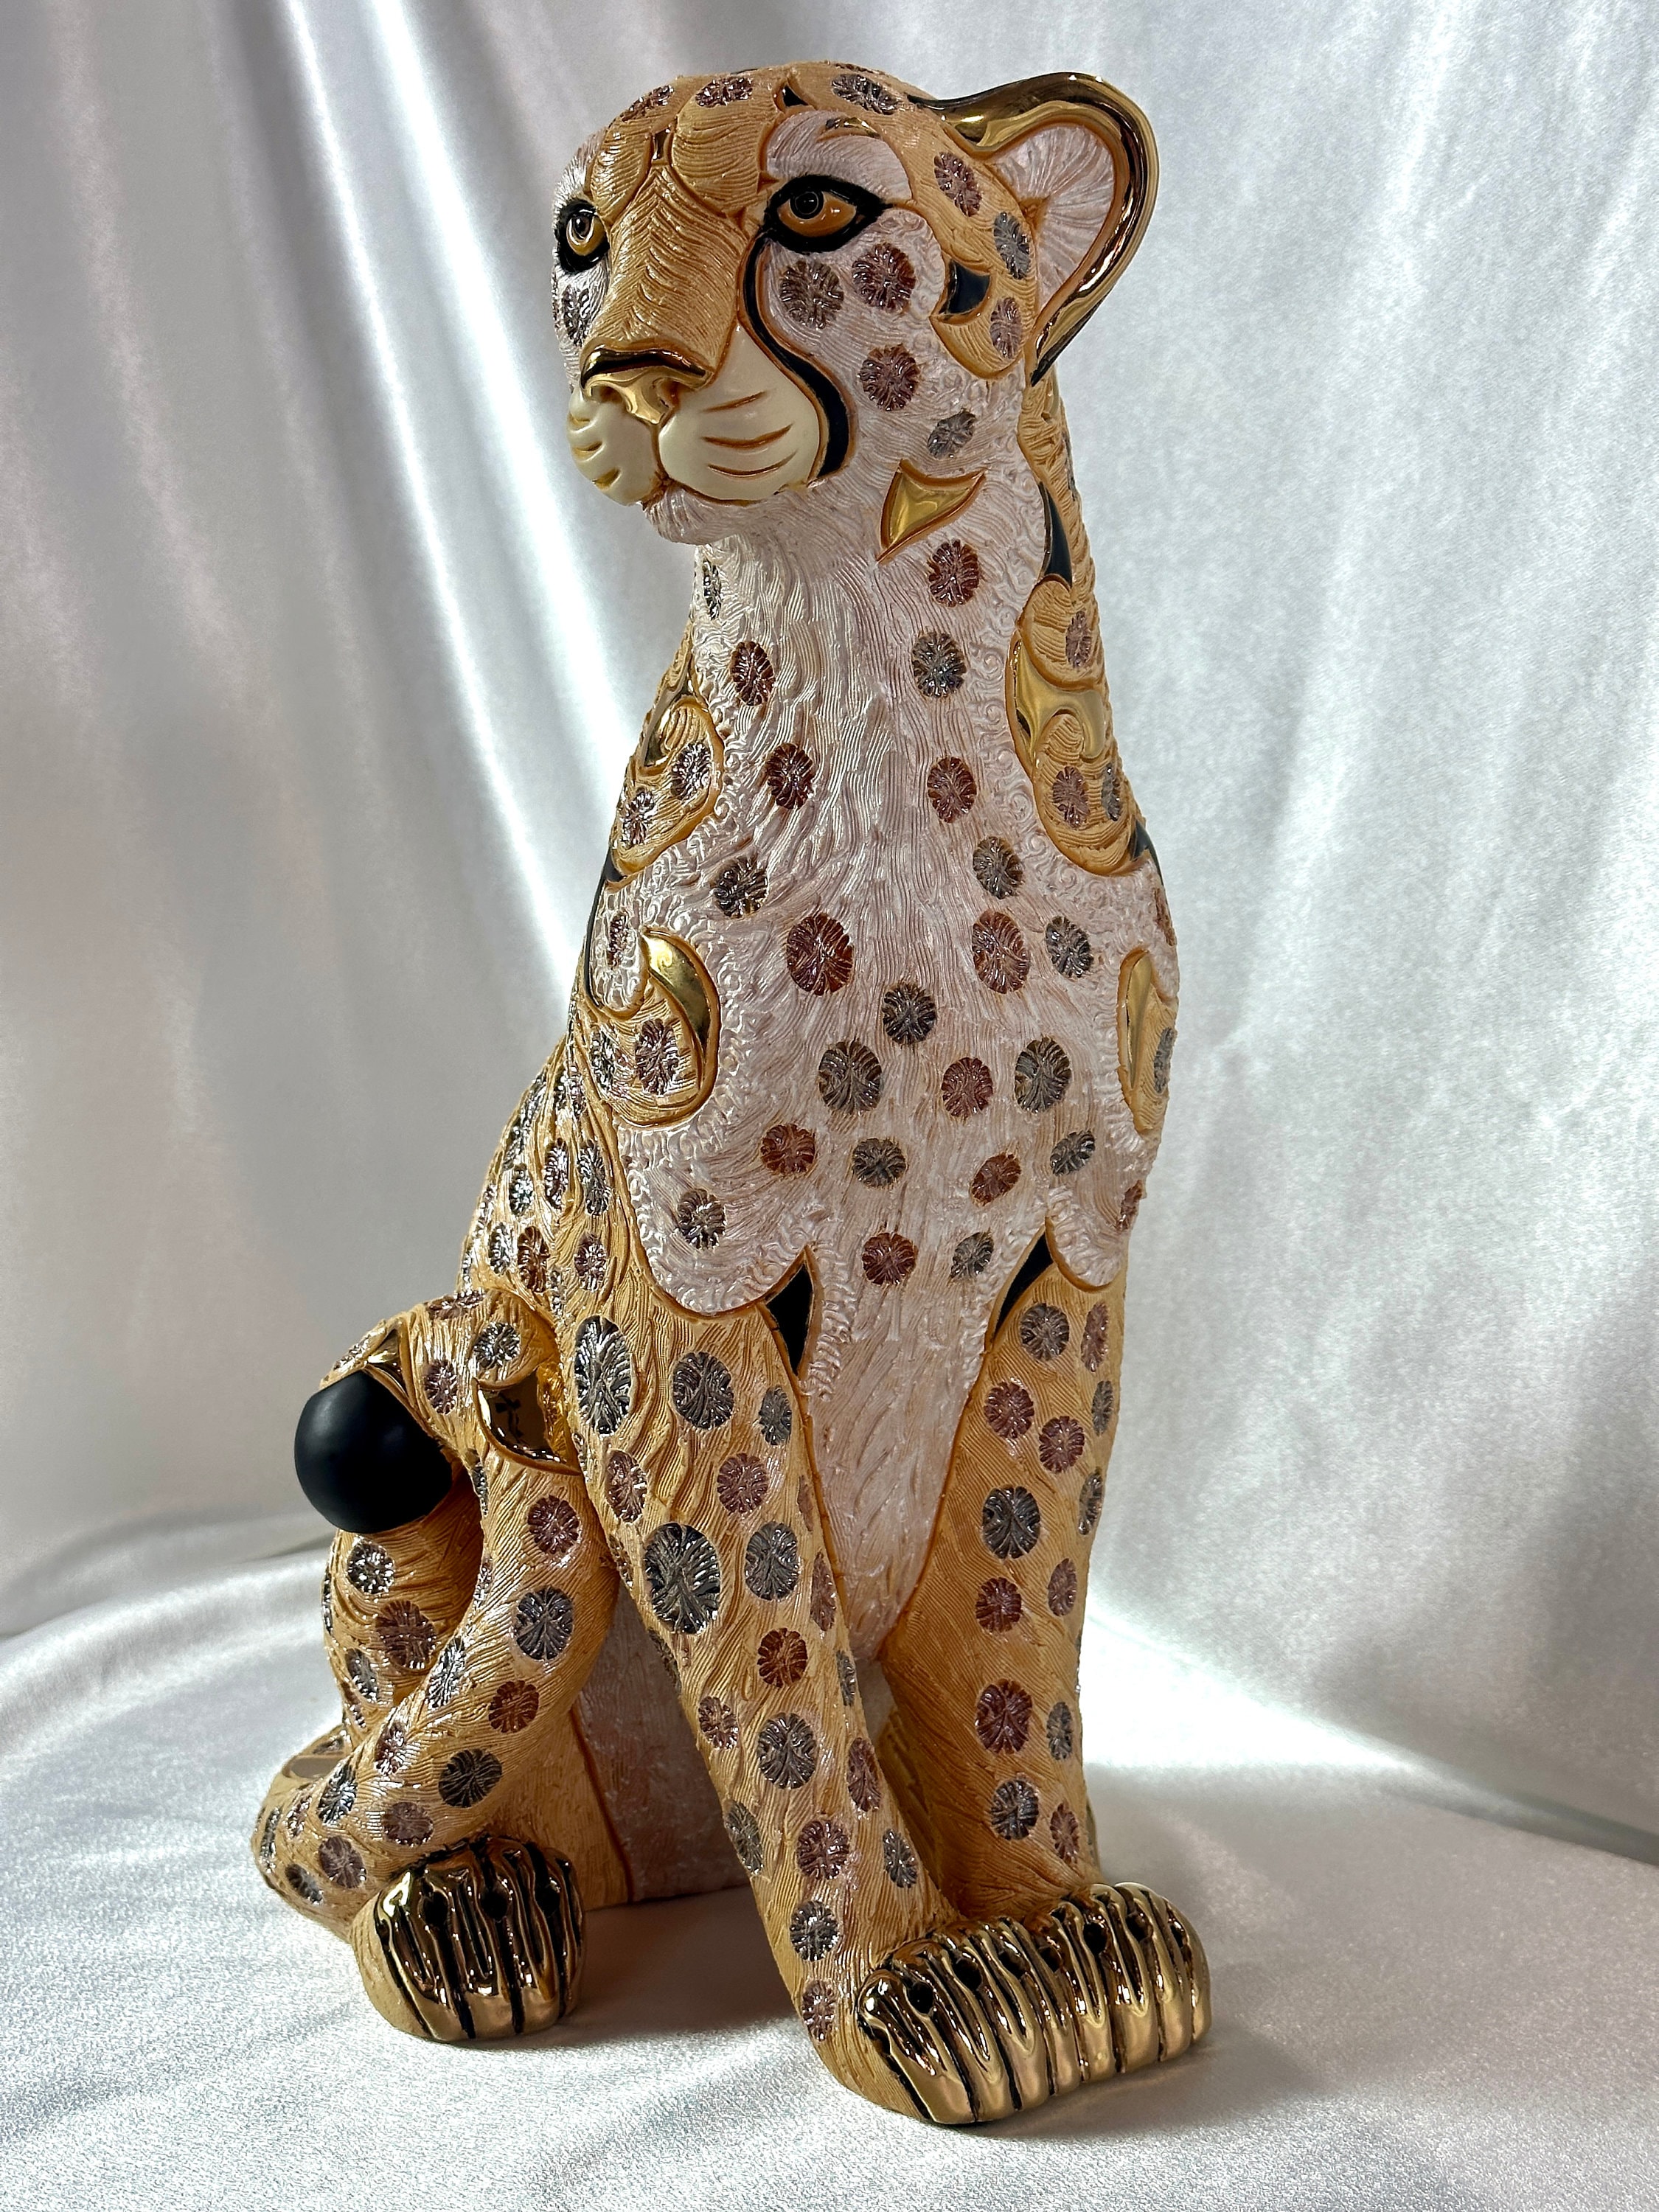 Handmade Ceramic Cheetah Sculpture De Rosa Collections Gallery